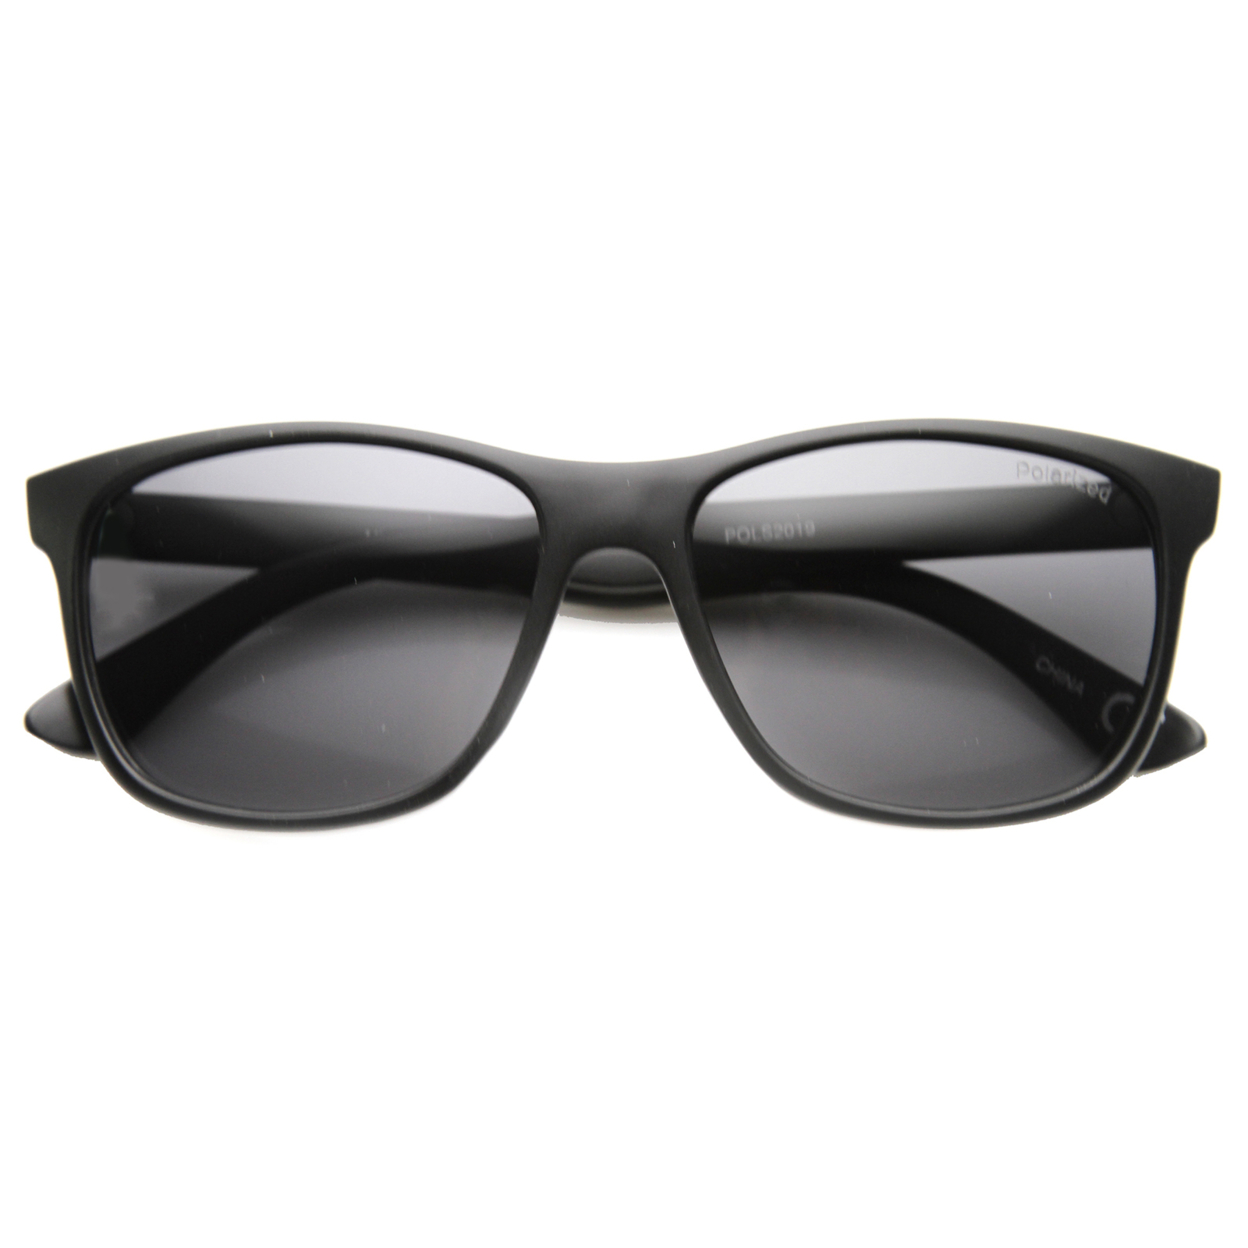 Unisex Horn Rimmed Sunglasses With UV400 Protected Polarized Composite Lens 9844 - Shiny Black / Smoke